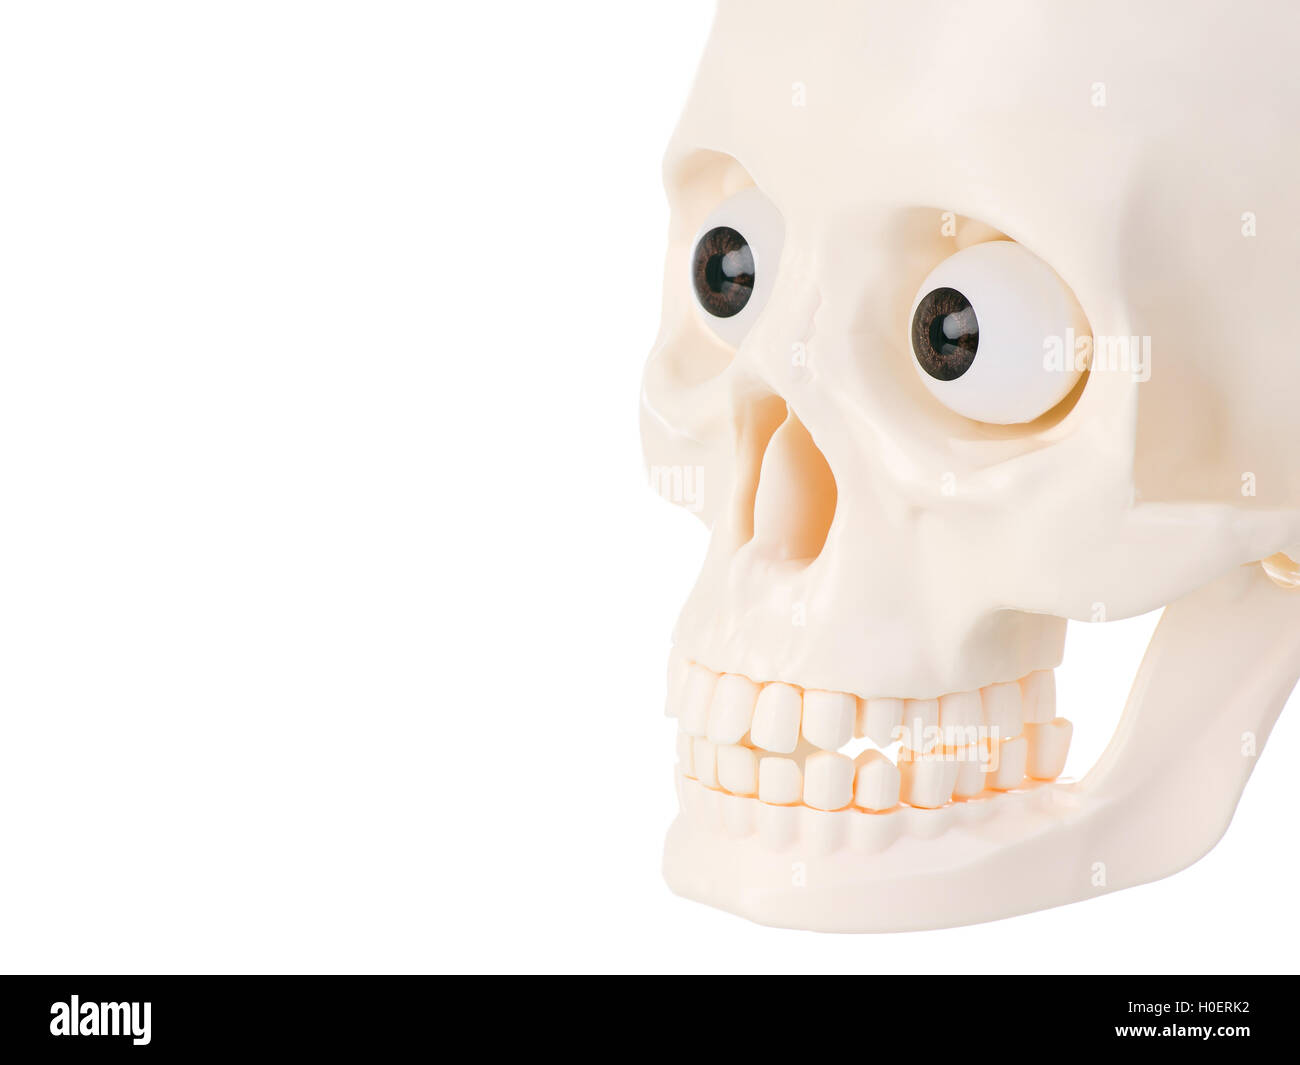 Plastic human skull  isolated on white background. Stock Photo